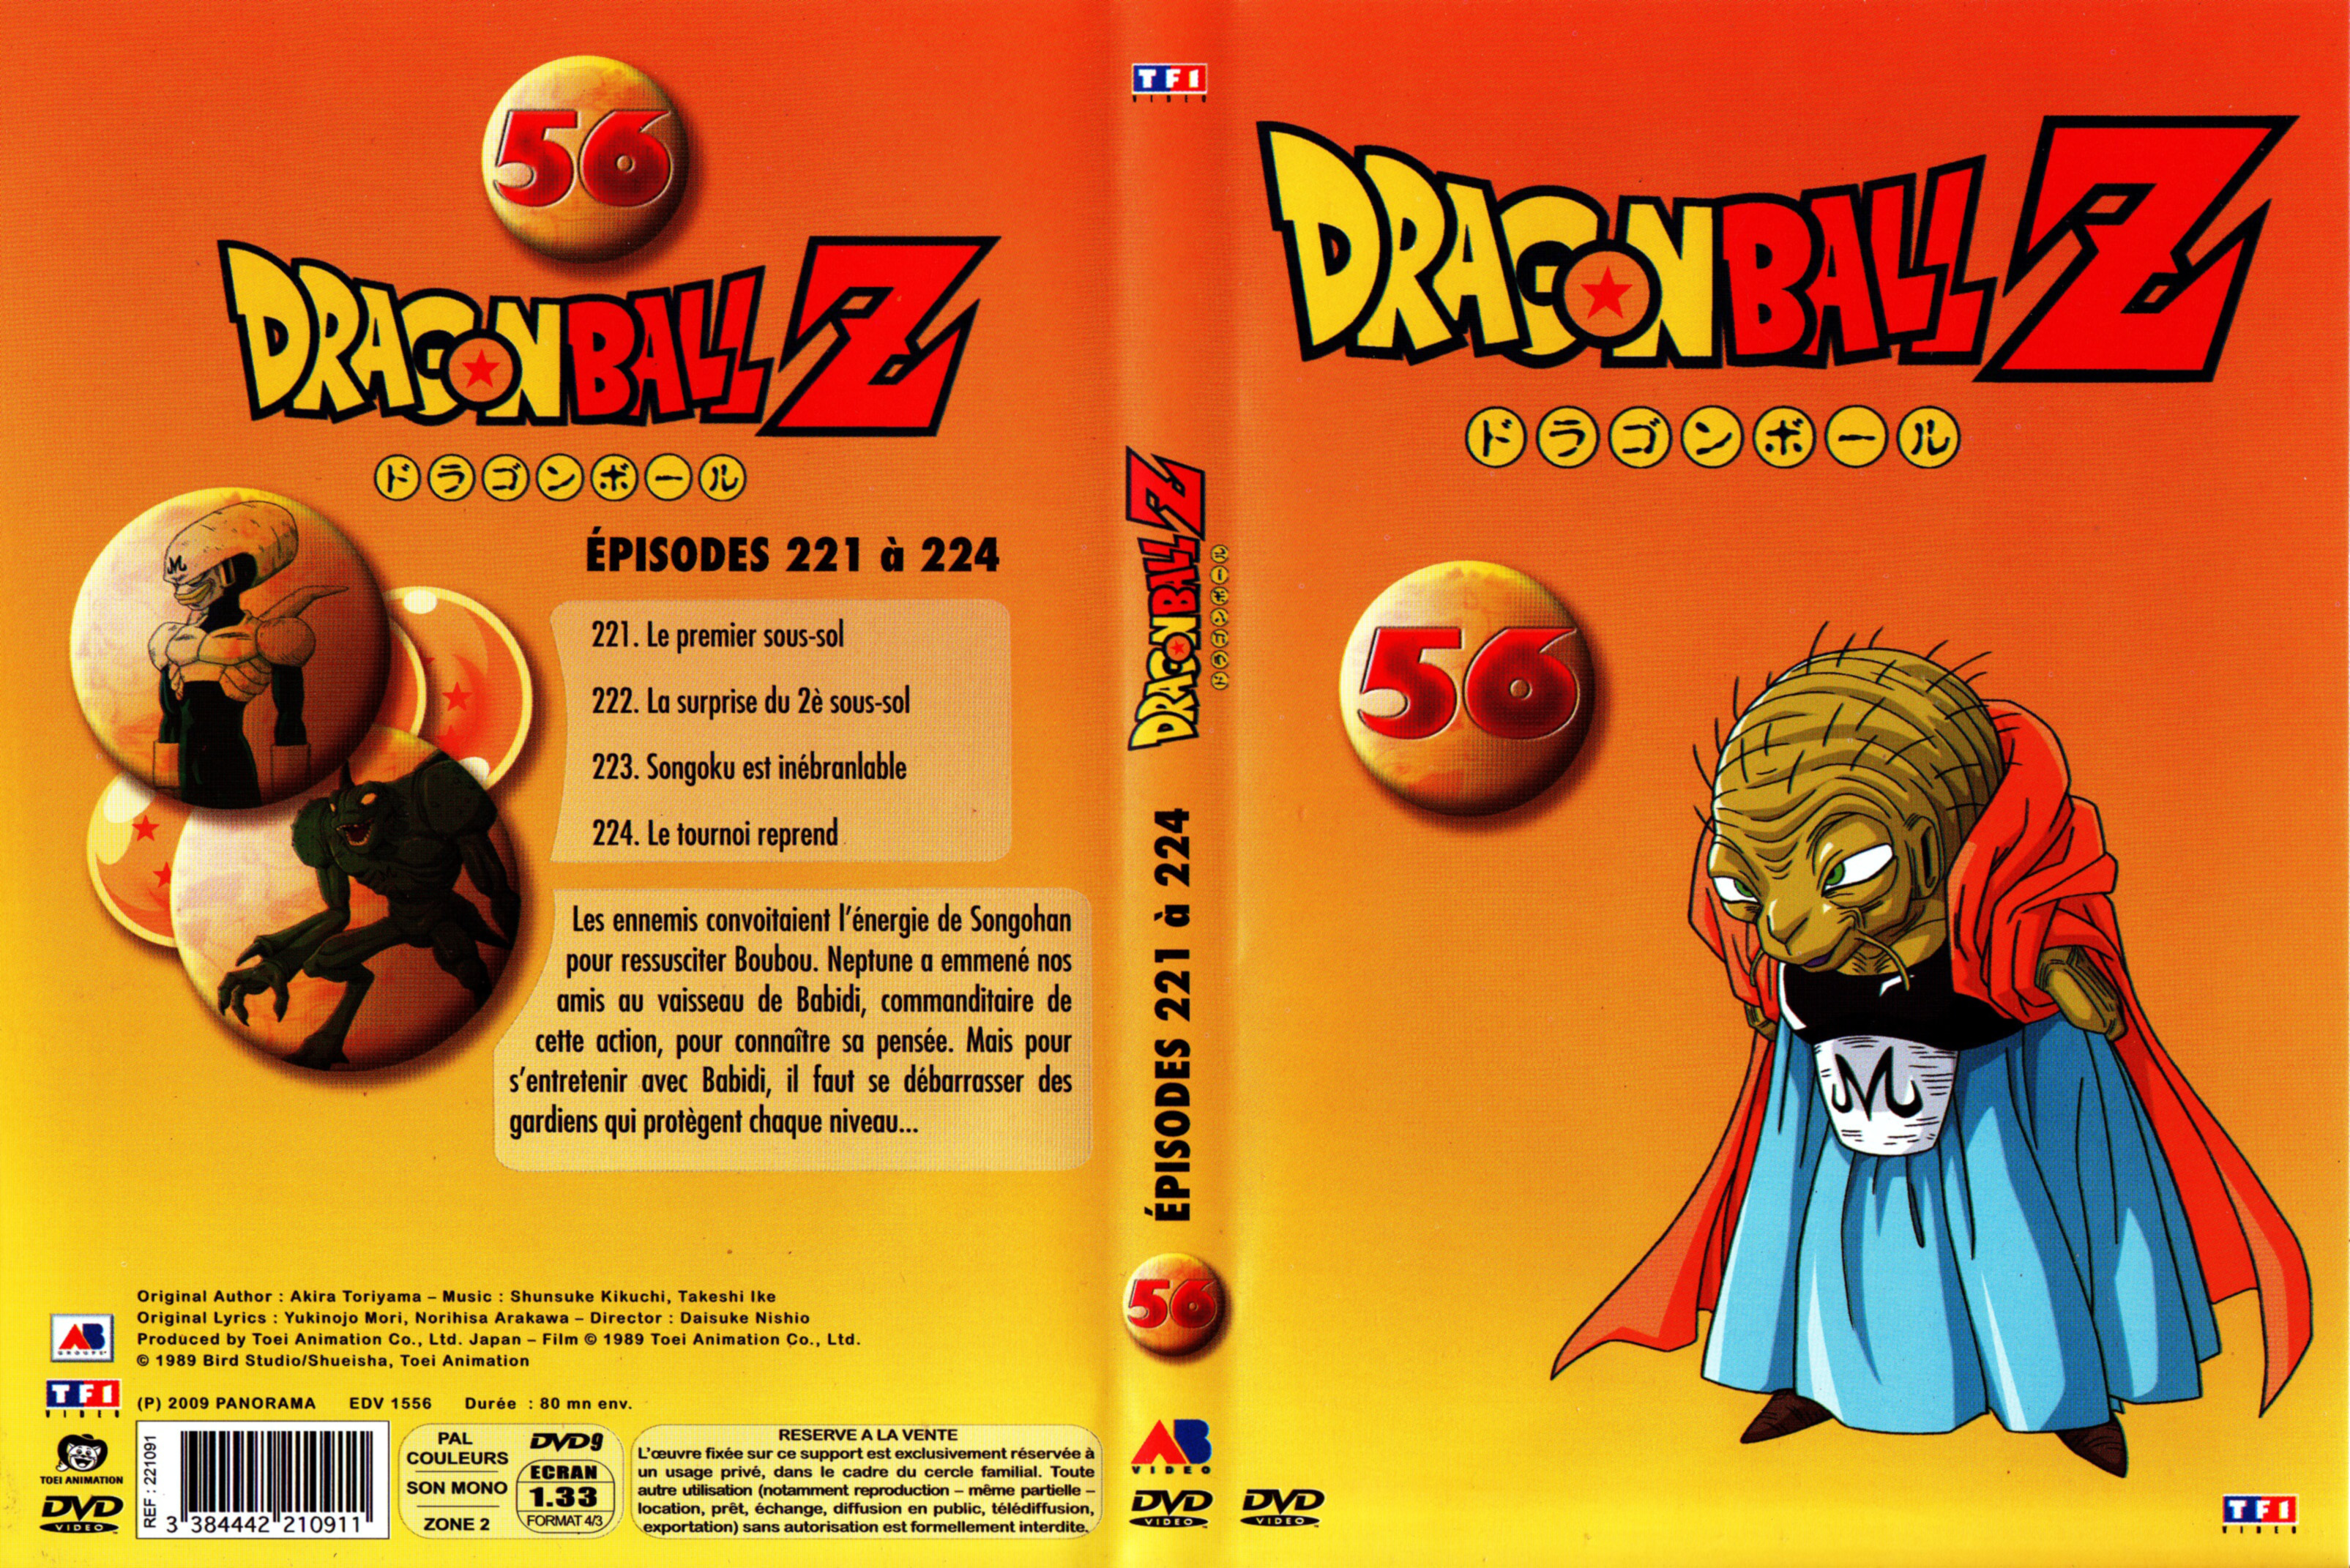 Jaquette DVD Dragon ball Z vol 56